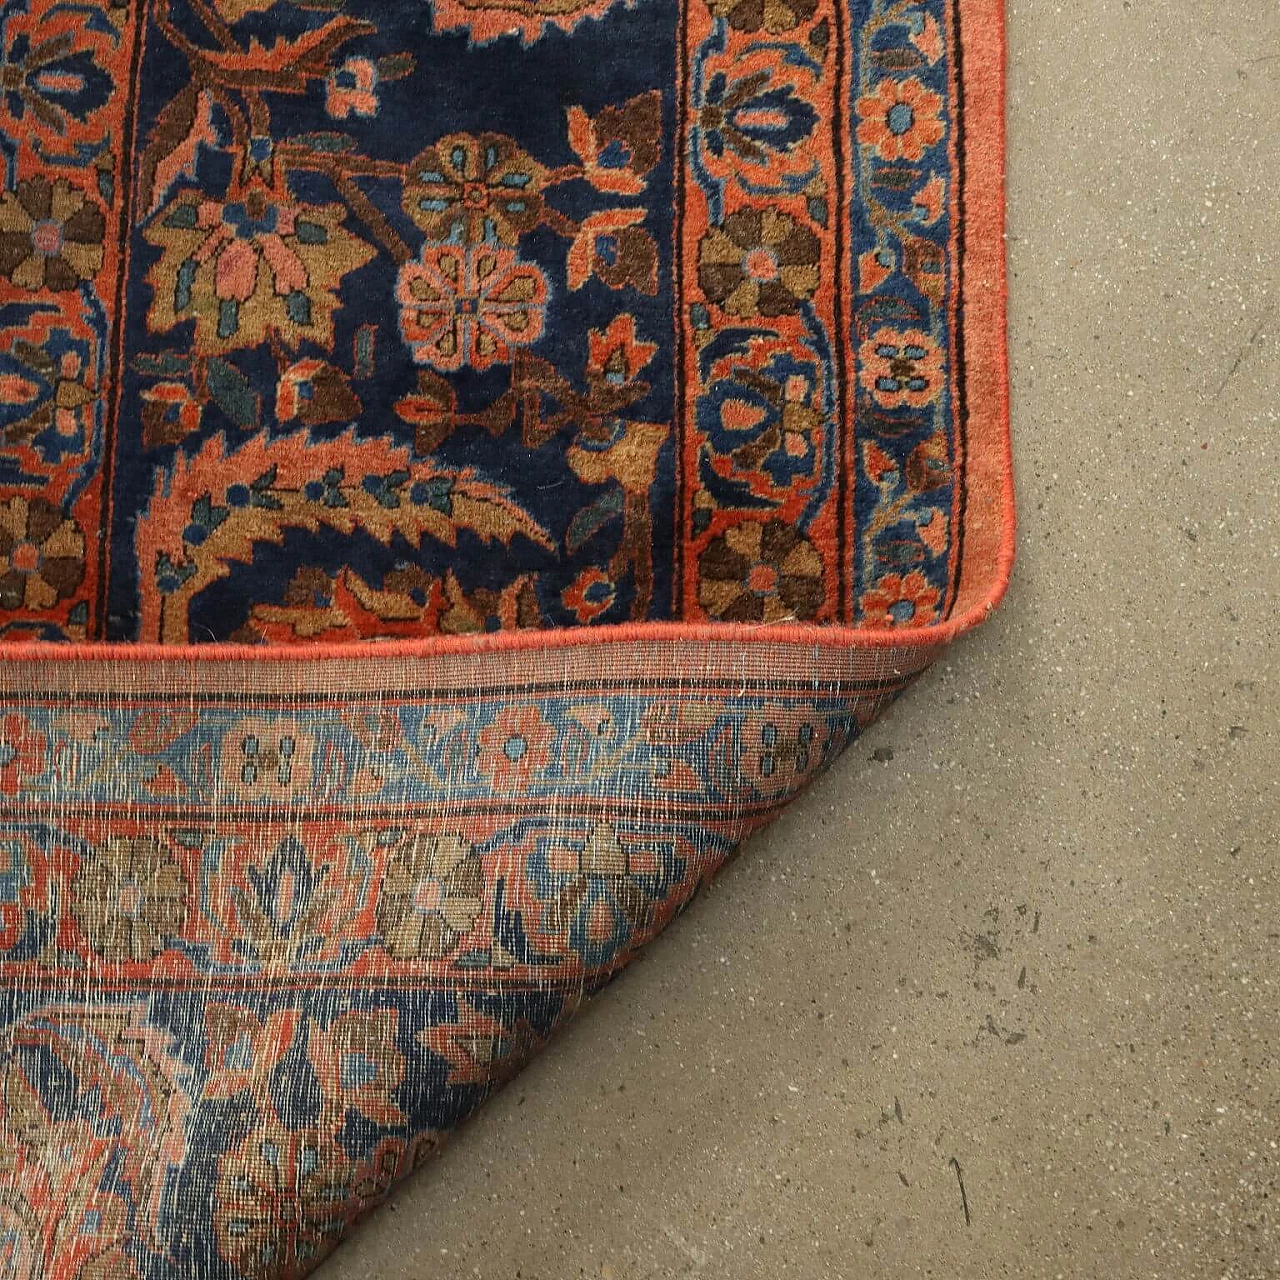 Iranian Keshan Manchester cotton and wool carpet 10